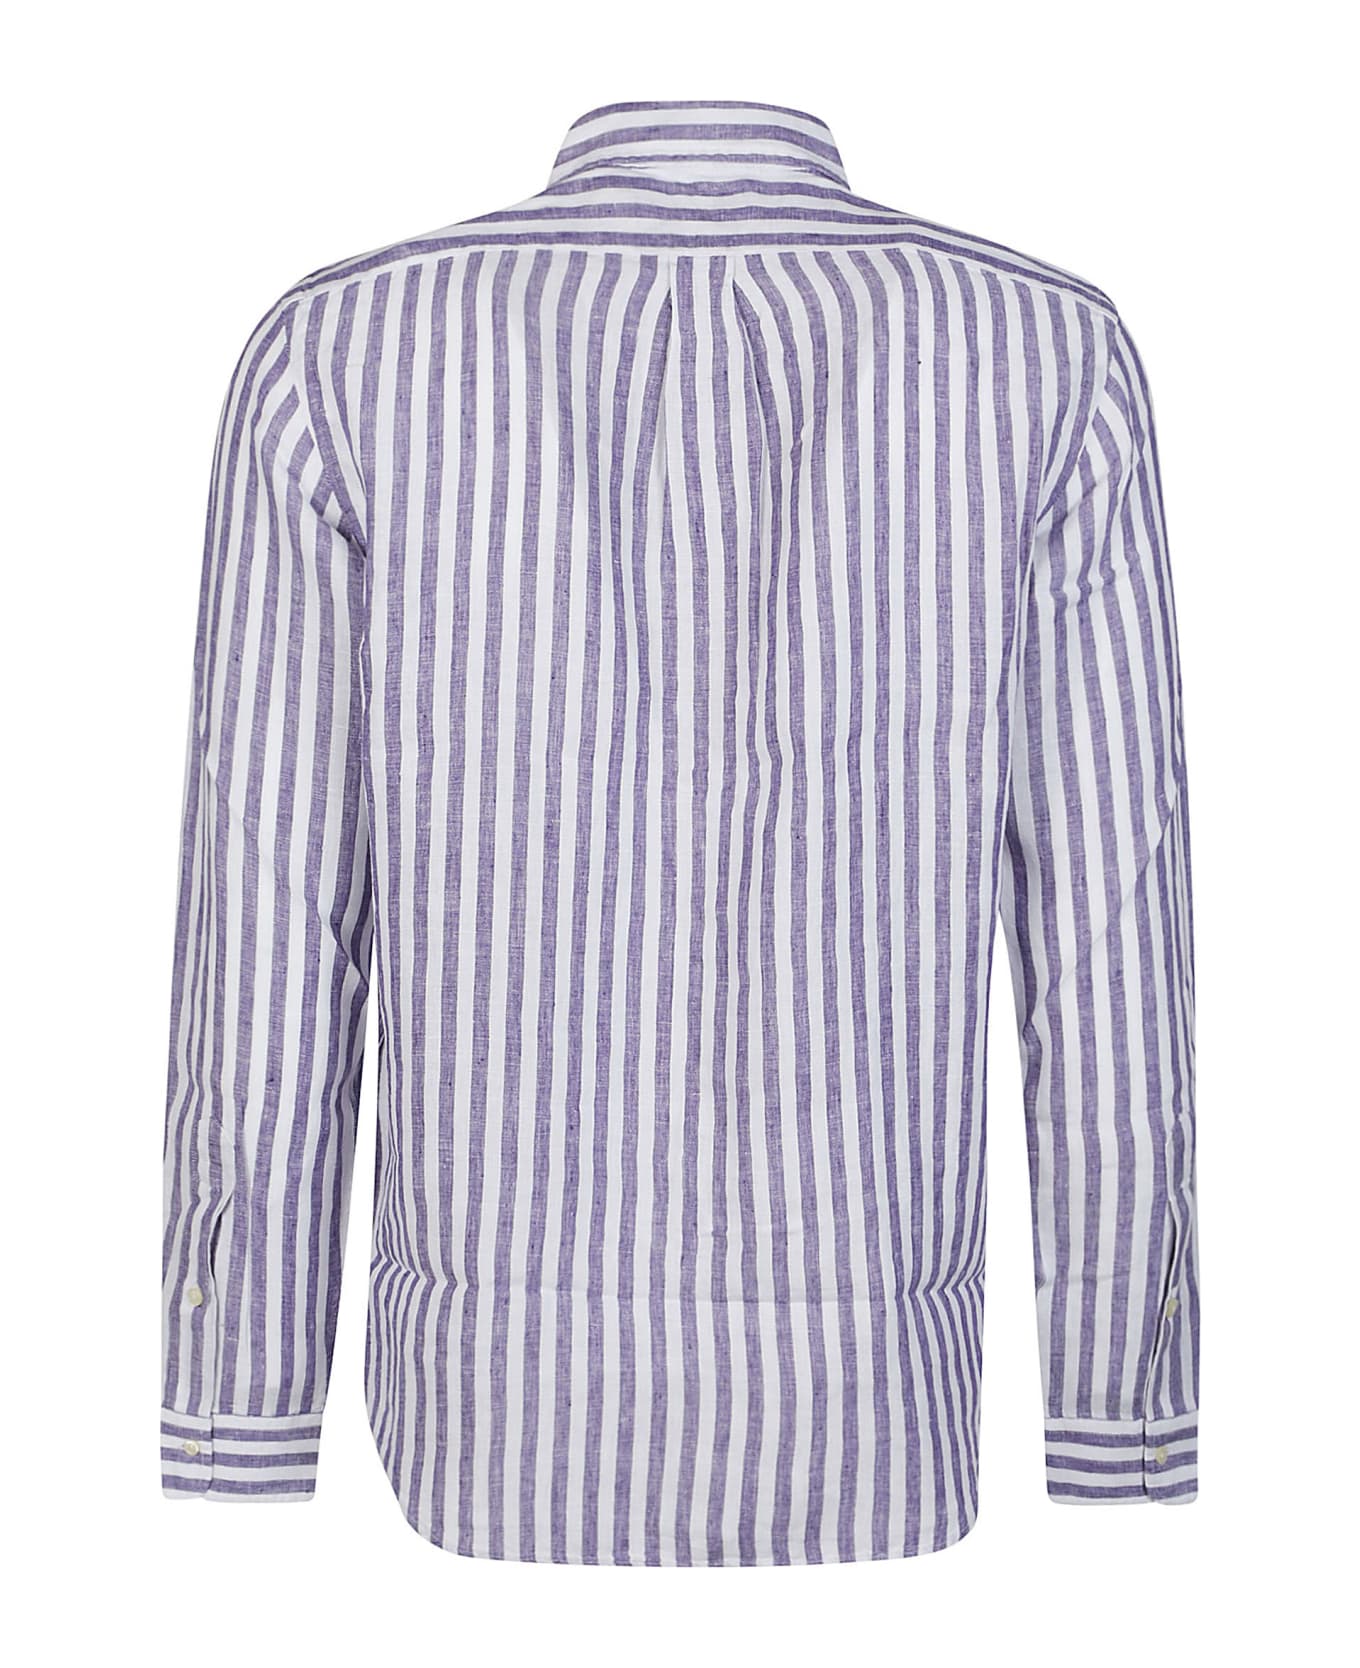 Polo Ralph Lauren Long Sleeve Shirt - Blue/white